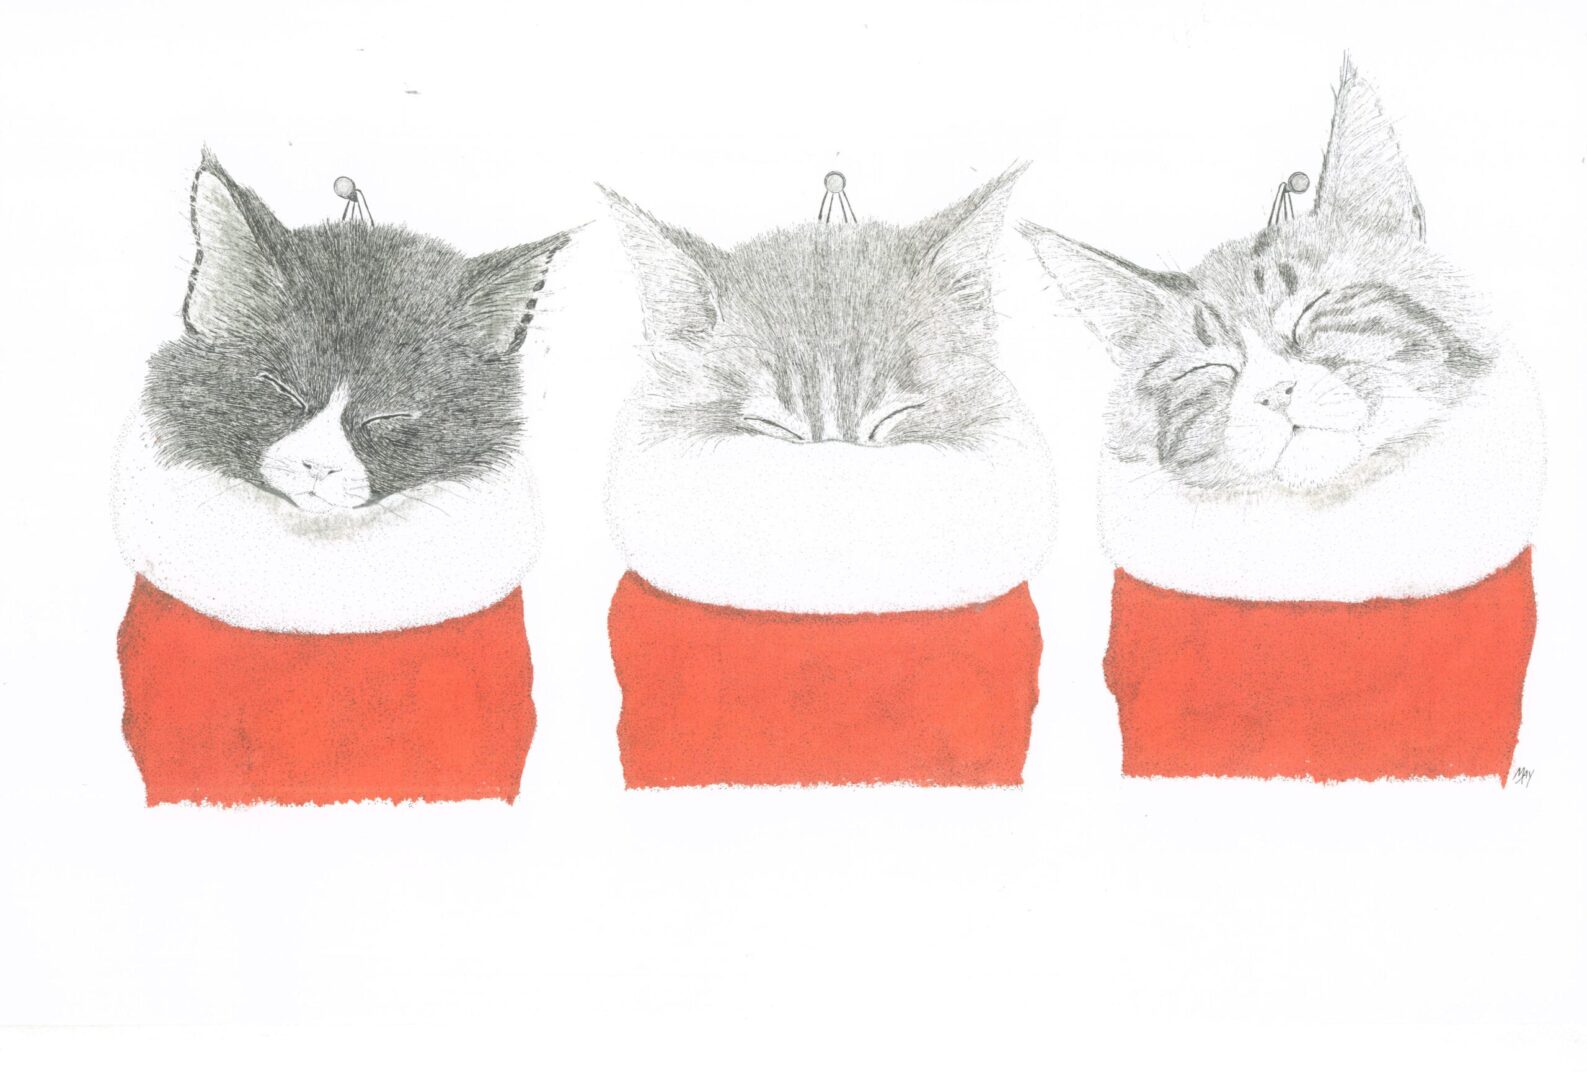 Three cats sleeping inside Christmas stockings